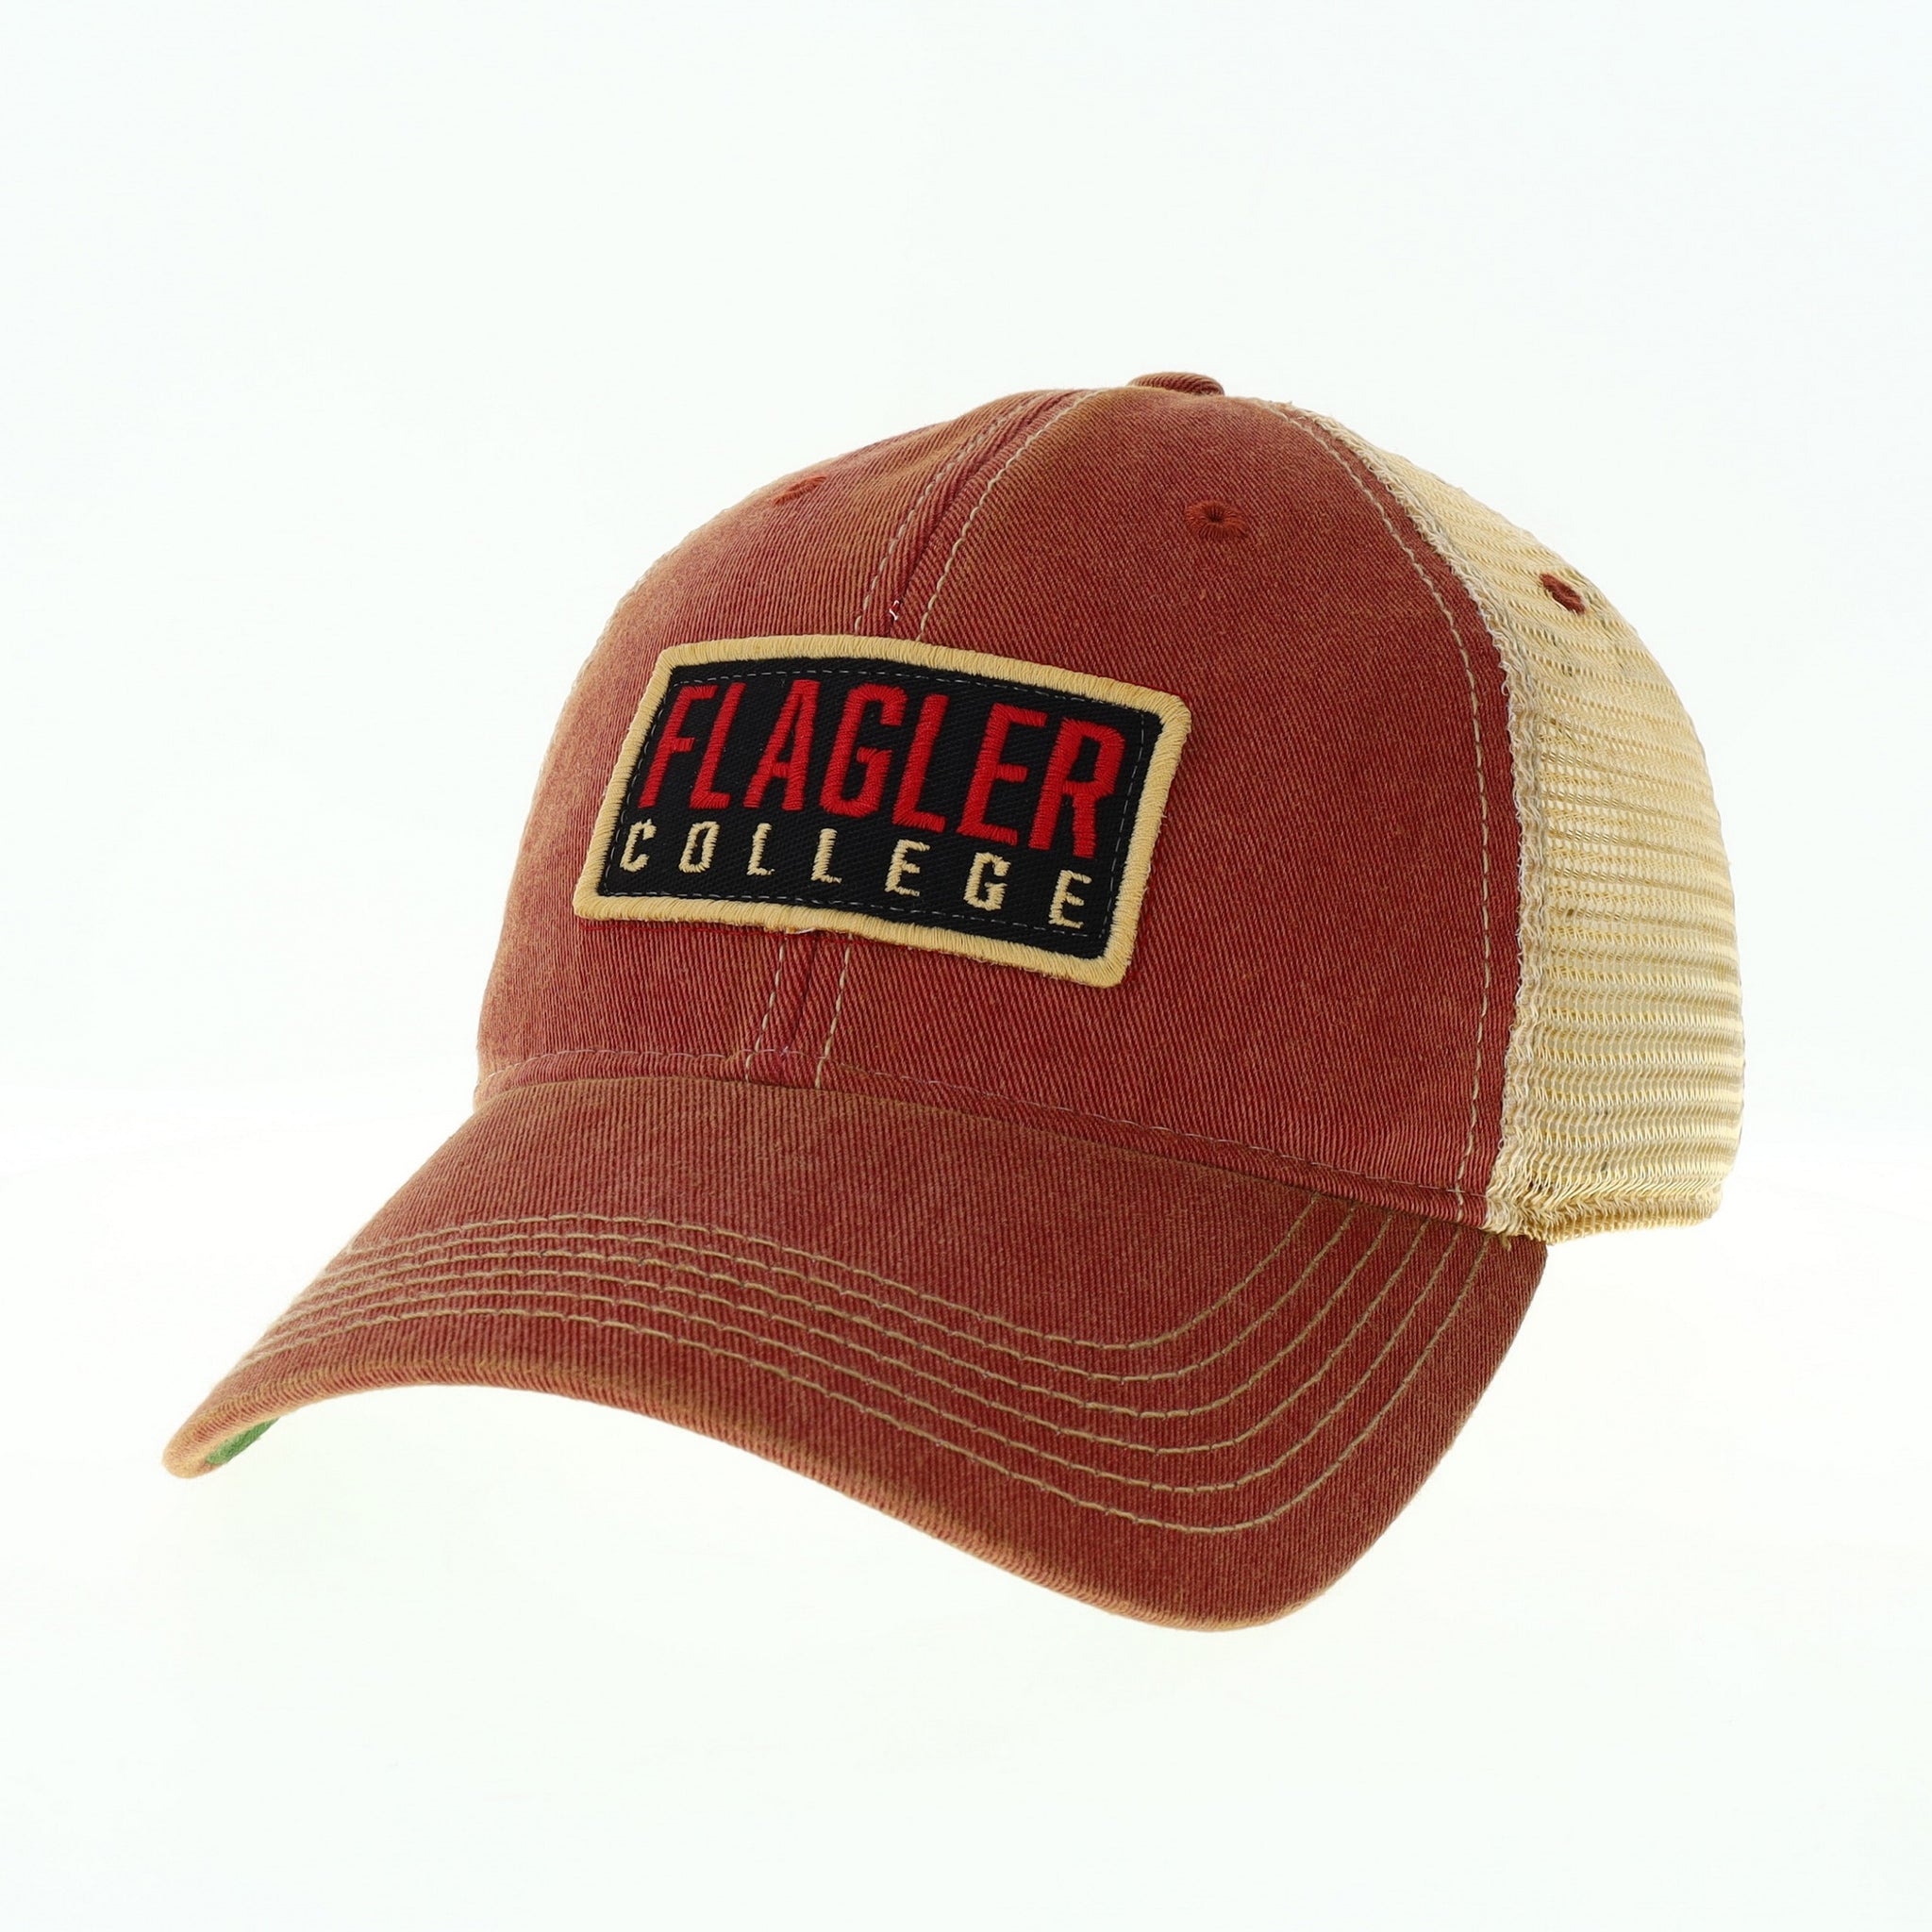 Flagler College OFA Trucker Hat